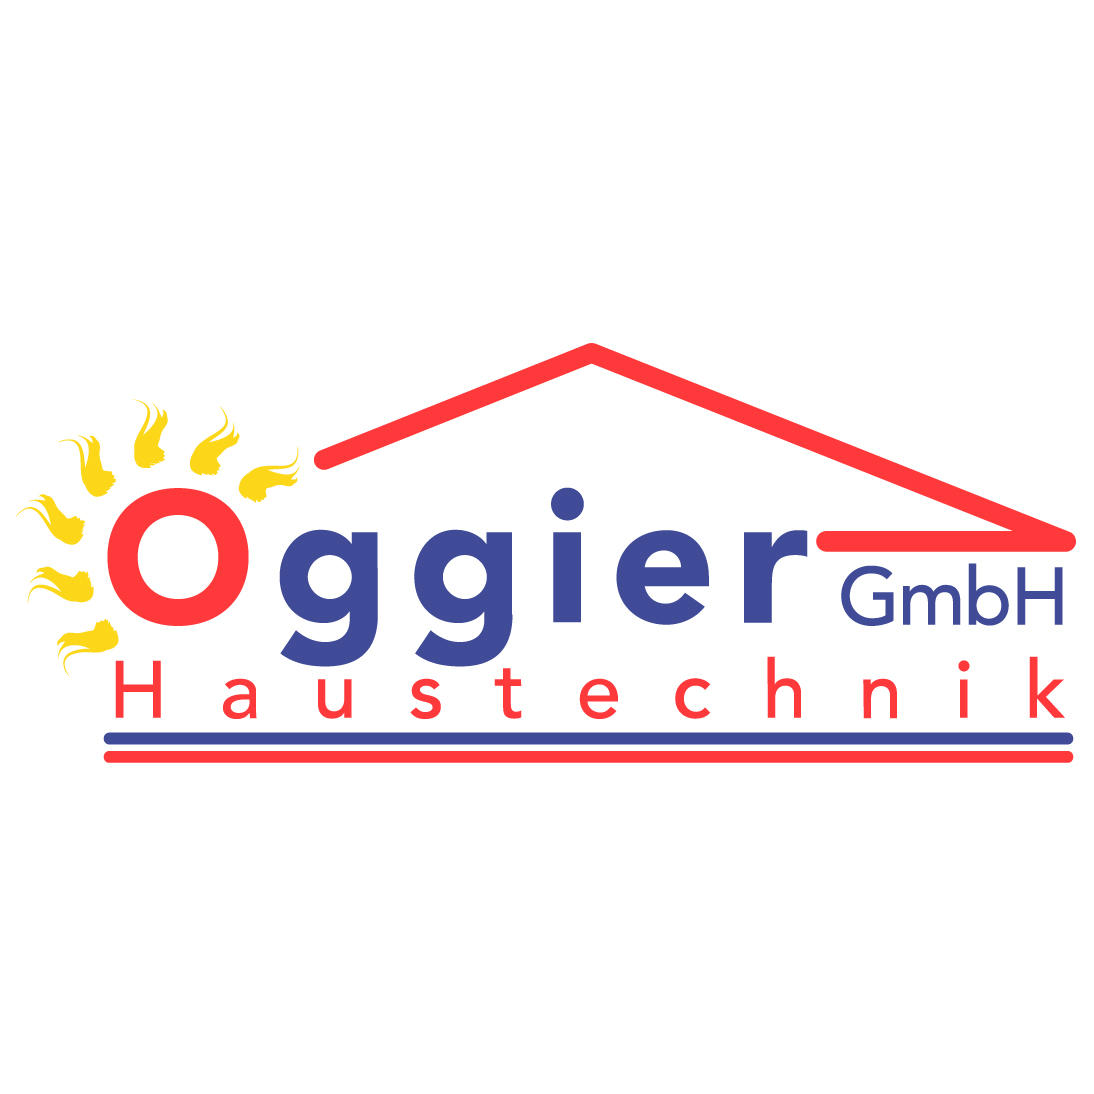 Oggier Haustechnik GmbH Logo